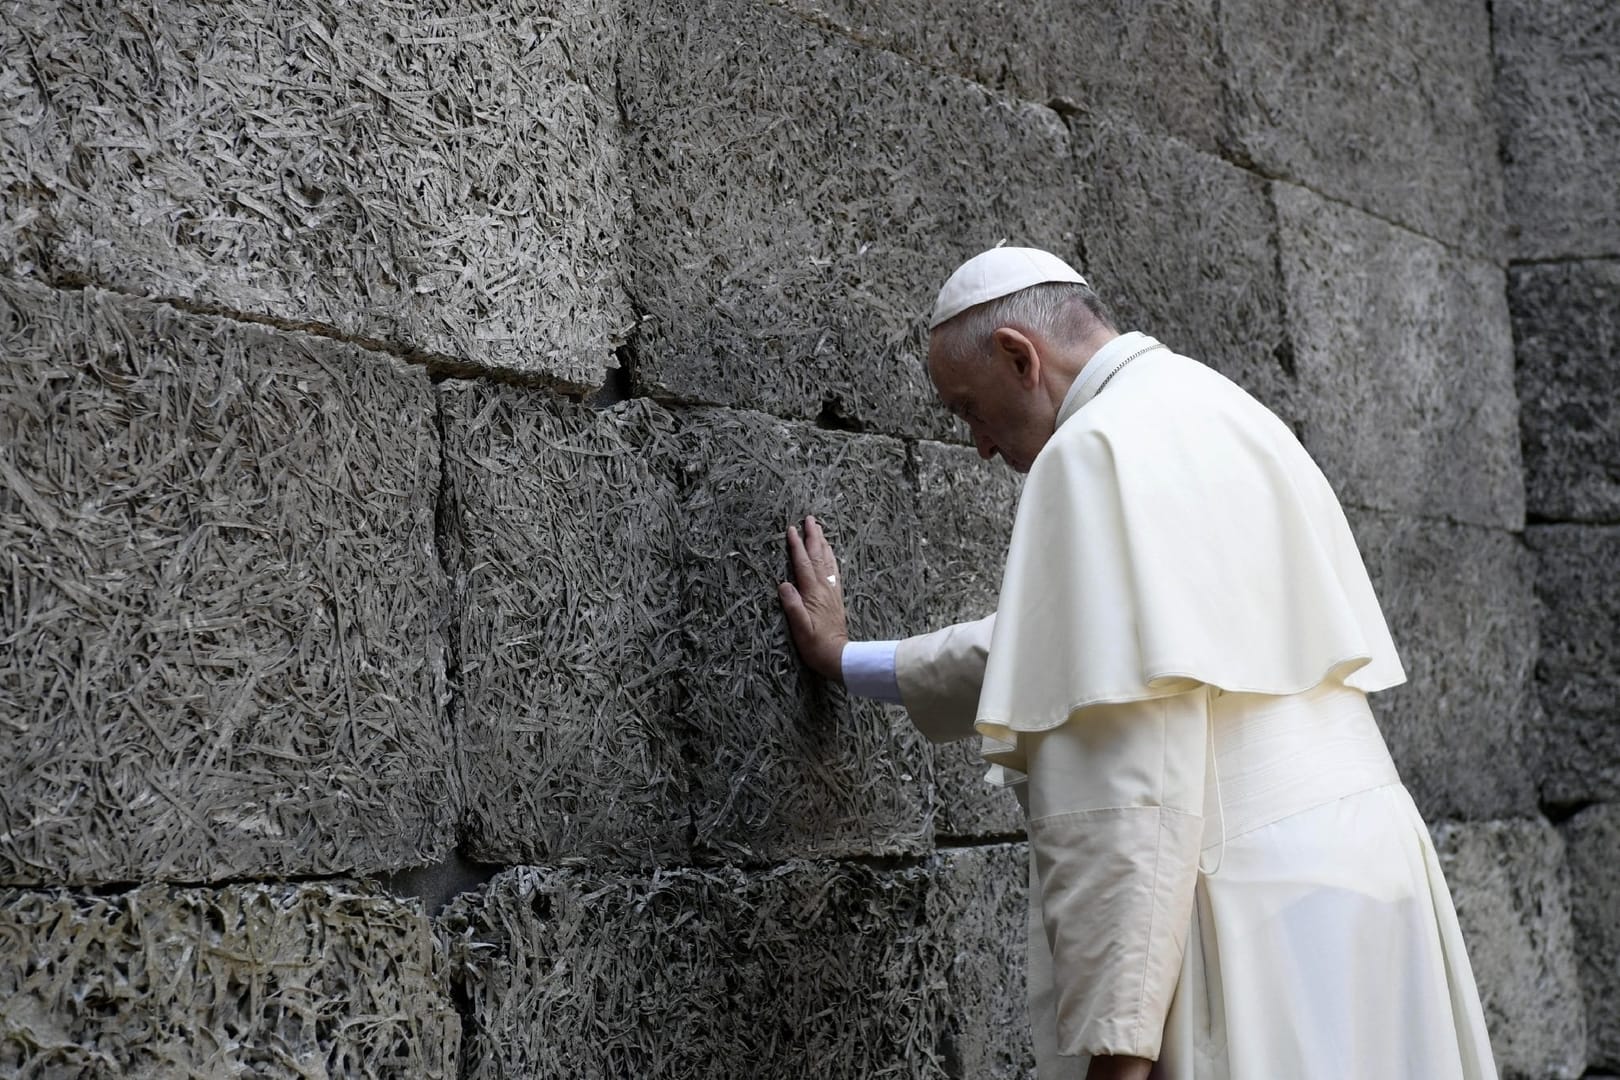 Amidst rise of anti-Semitism in Europe, Vatican calls for vigilance